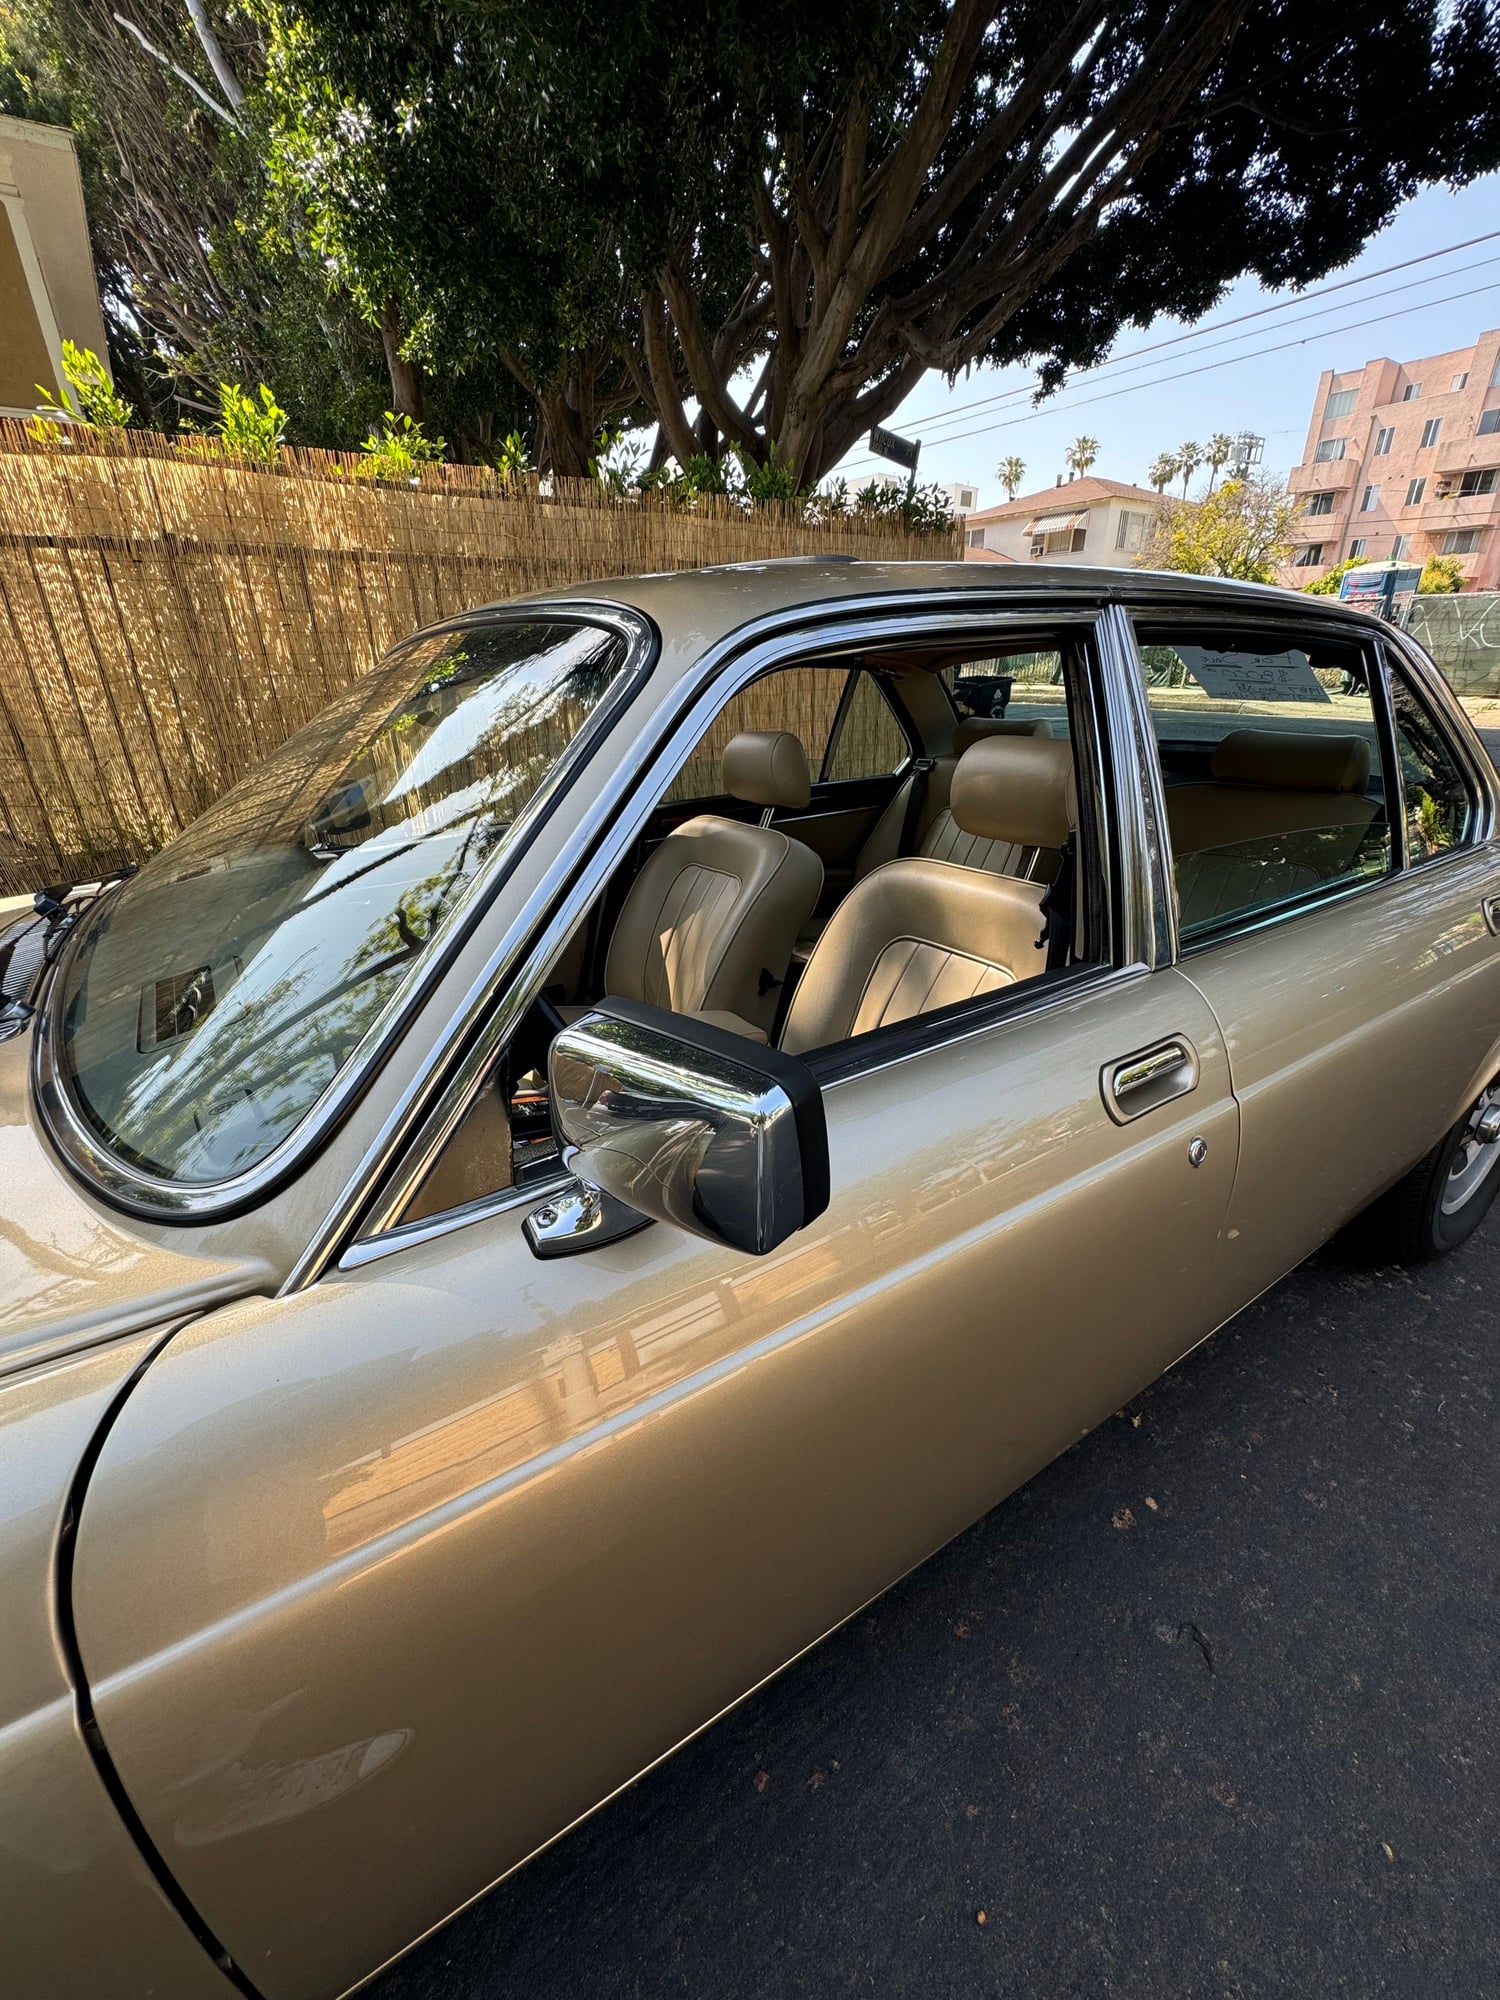 1987 Jaguar Vanden Plas - 1987 jaguar xj6 Van Den Plas - for sale: $8000 - Los Angeles - Used - VIN sajay1348hc471276 - 134,000 Miles - 6 cyl - Automatic - Sedan - Gold - Los Angeles, CA 90038, United States